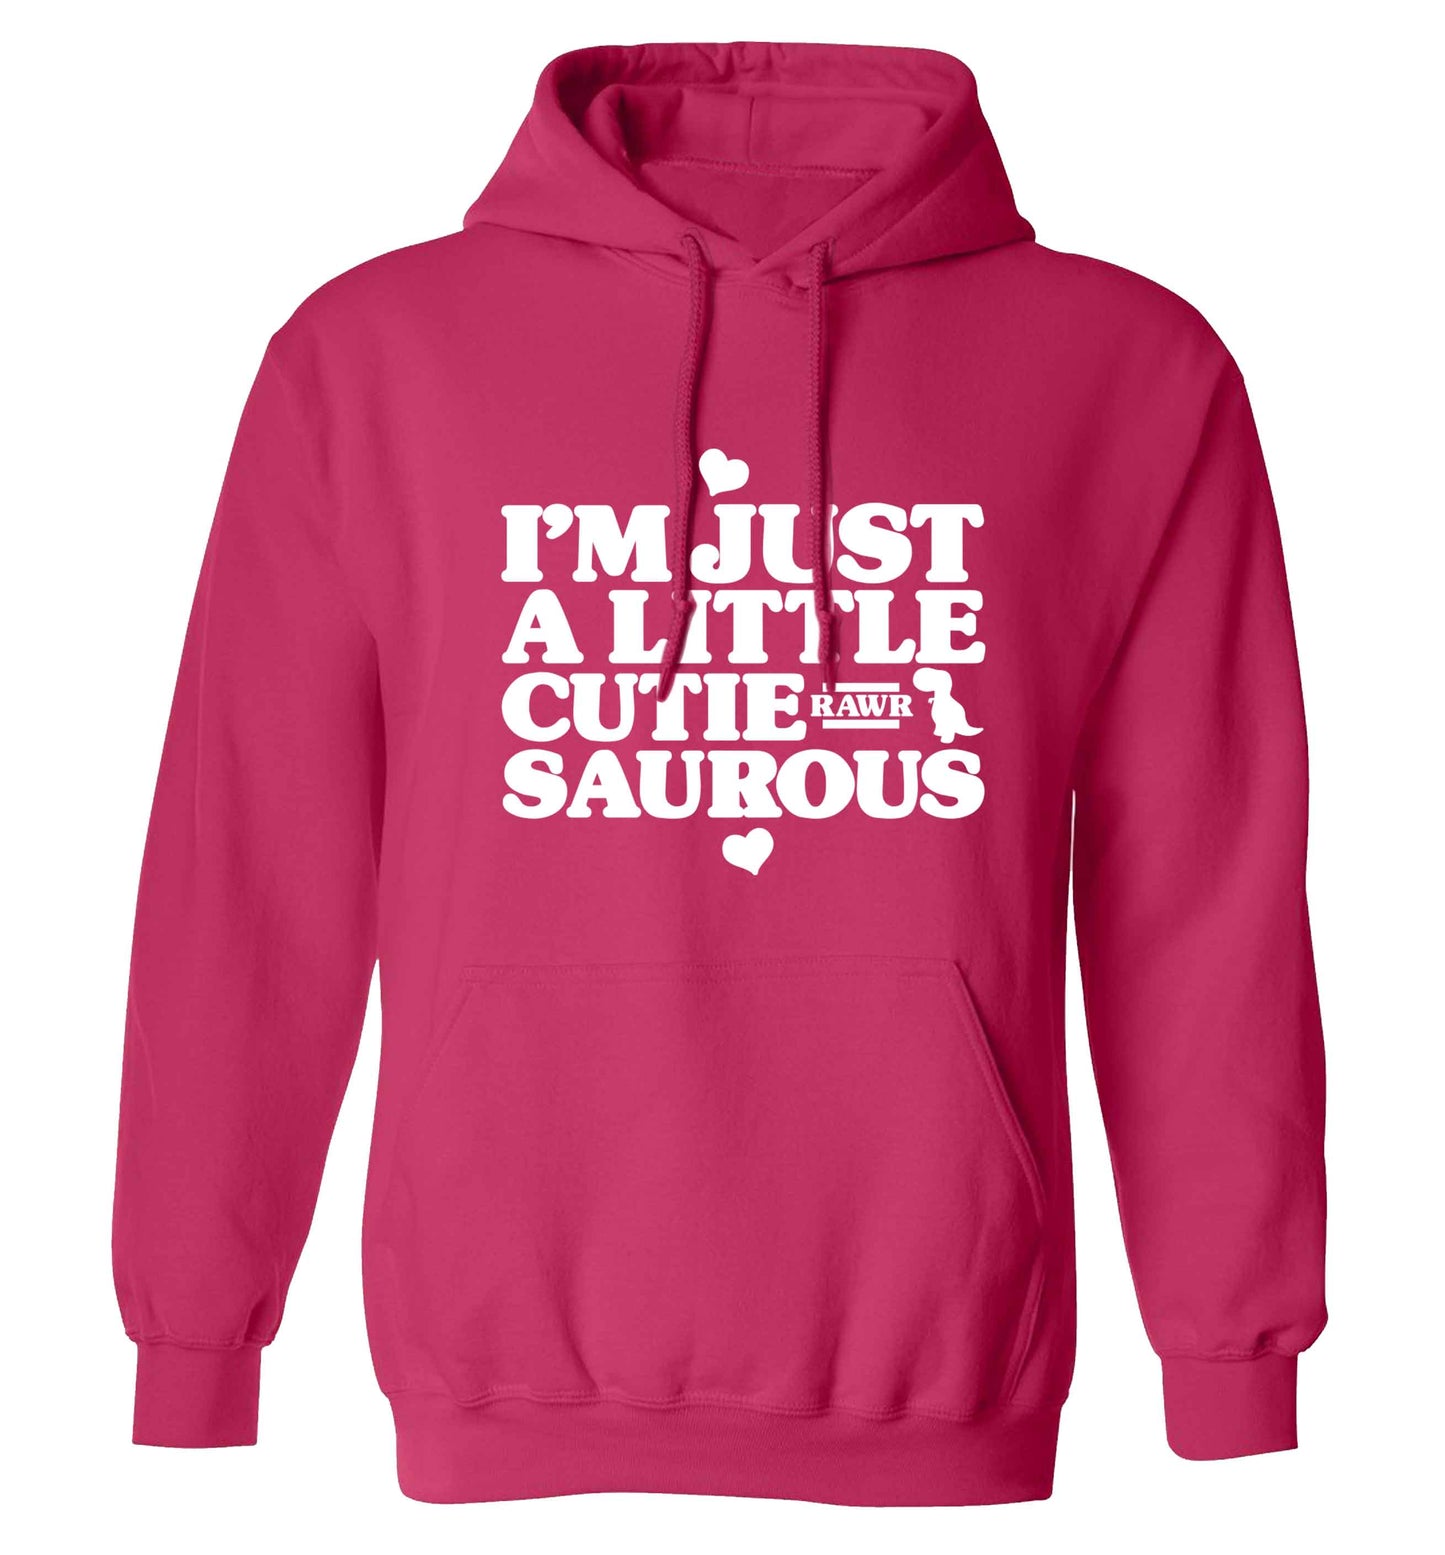 I'm just a little cutiesaurous adults unisex pink hoodie 2XL